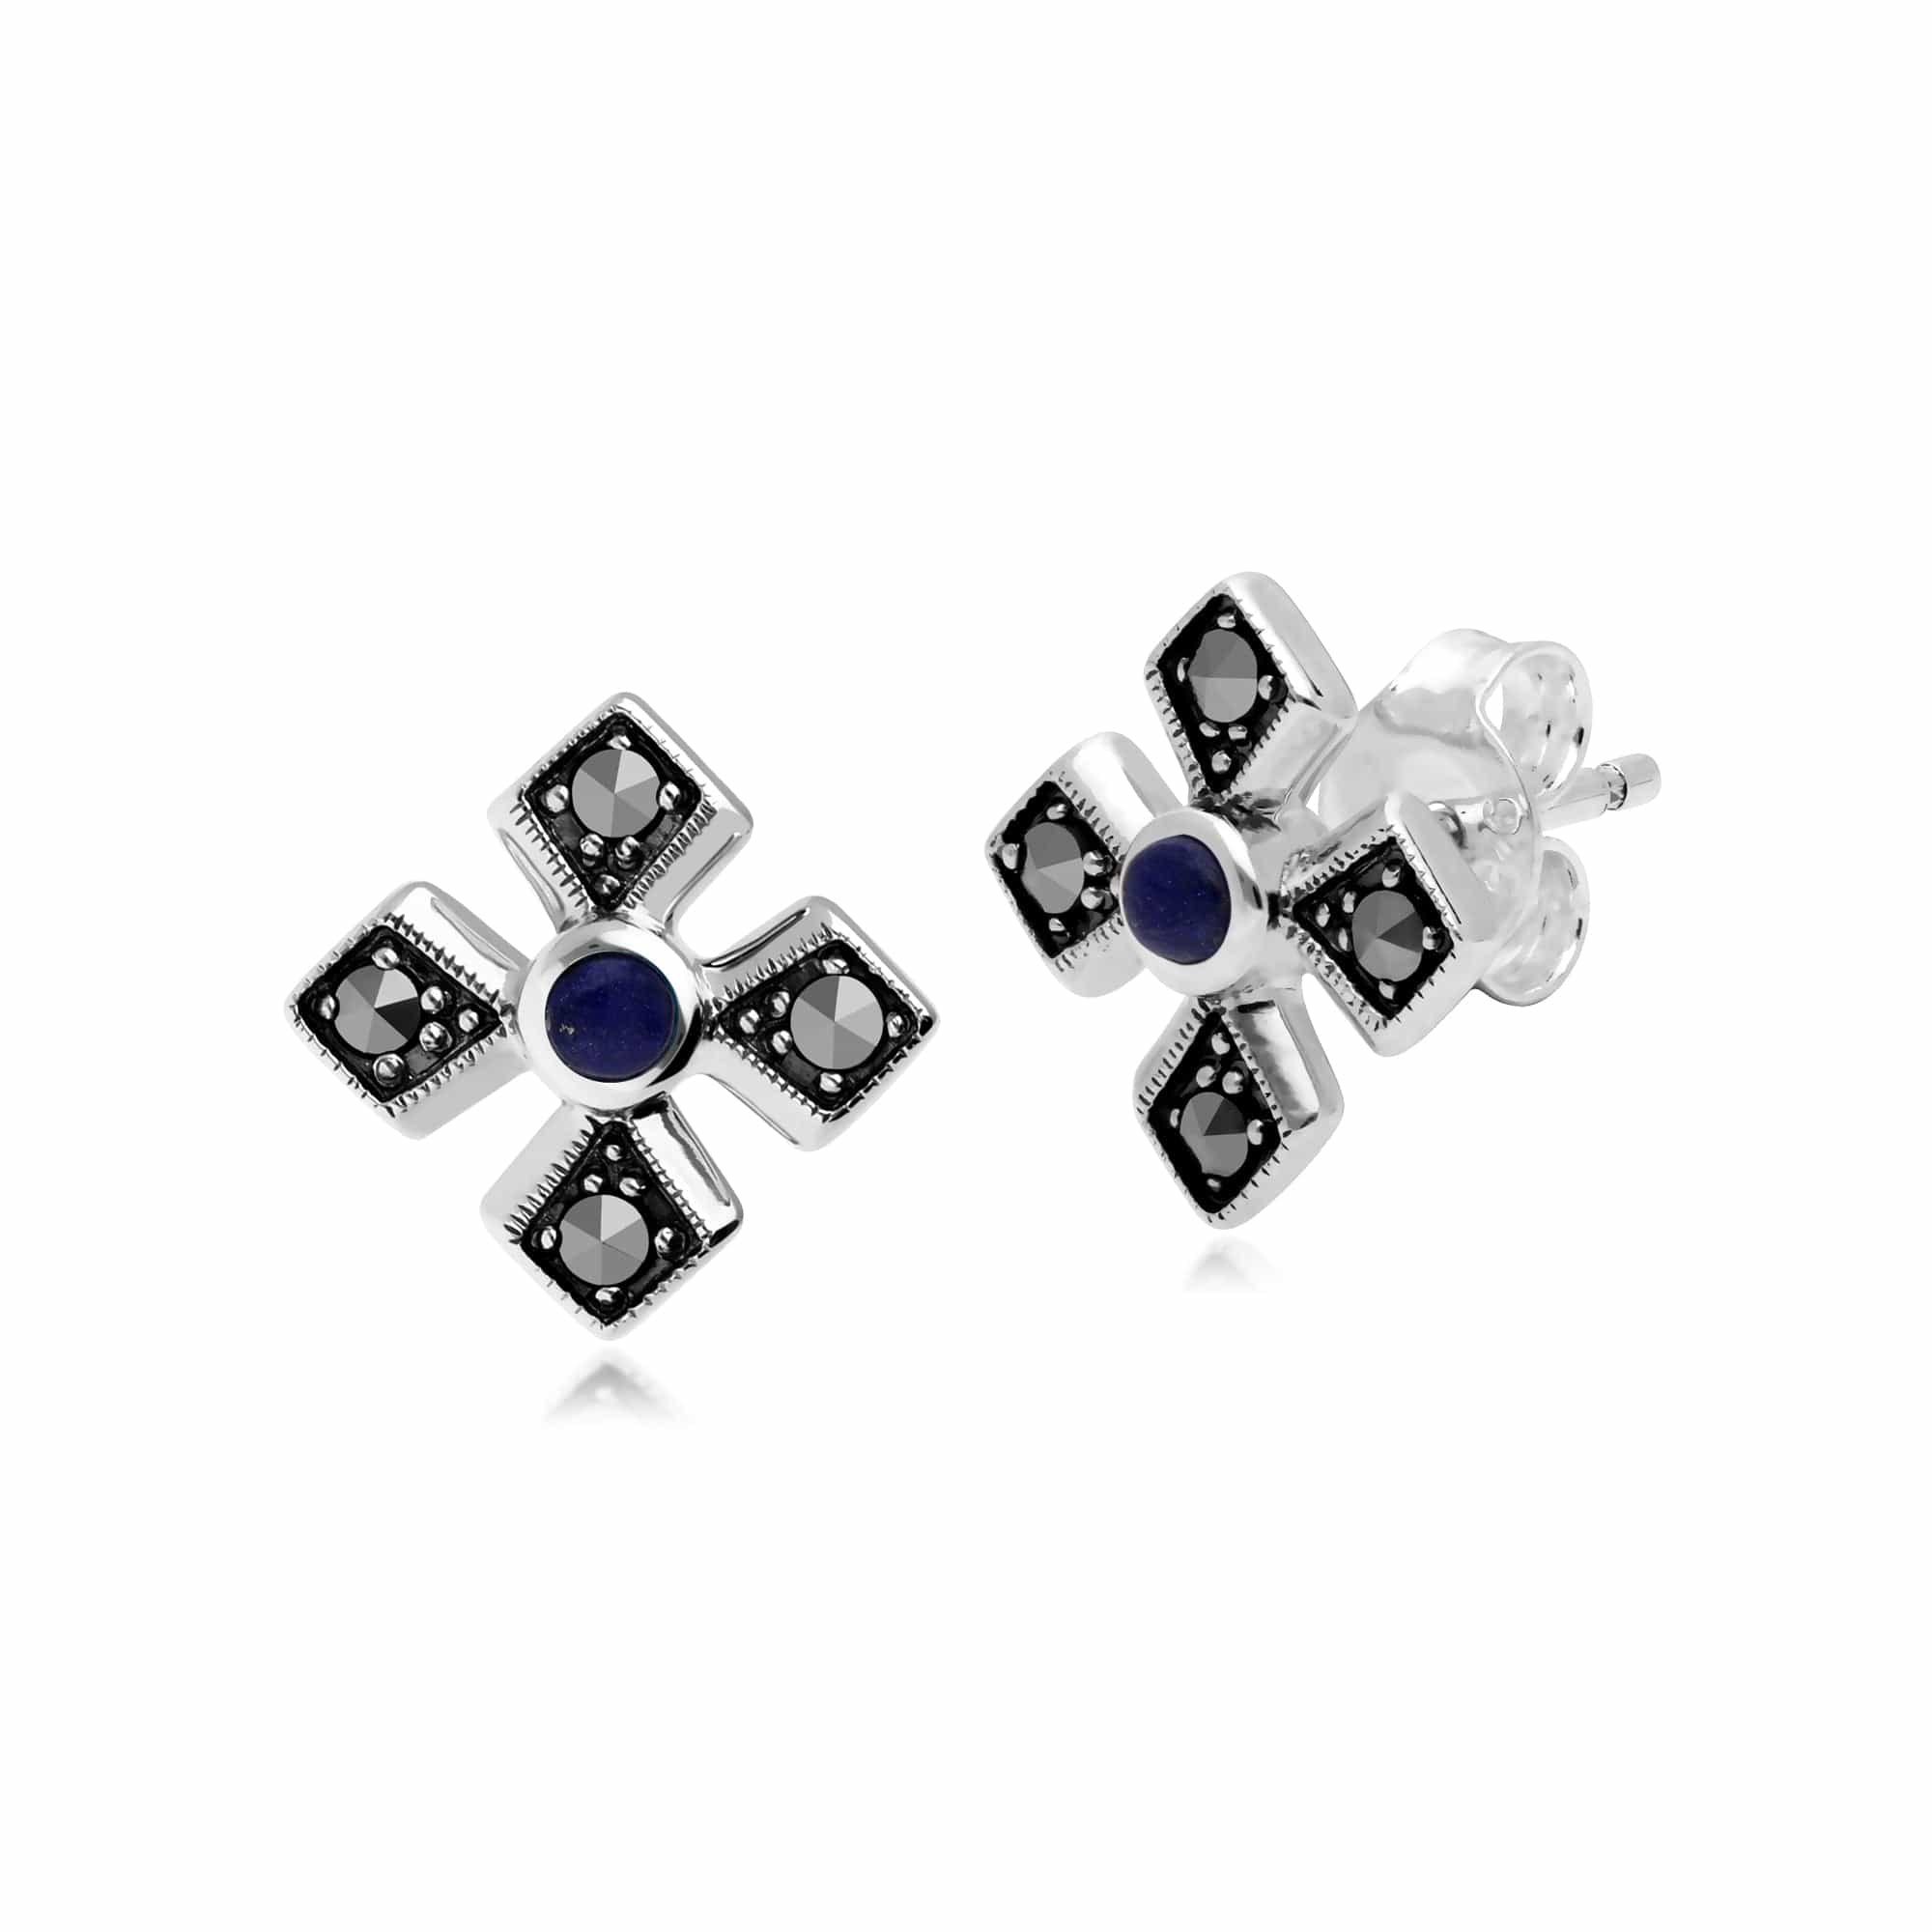 214E859903925 Gemondo Sterling Silver Marcasite & Lapis Lazuli Earring 1